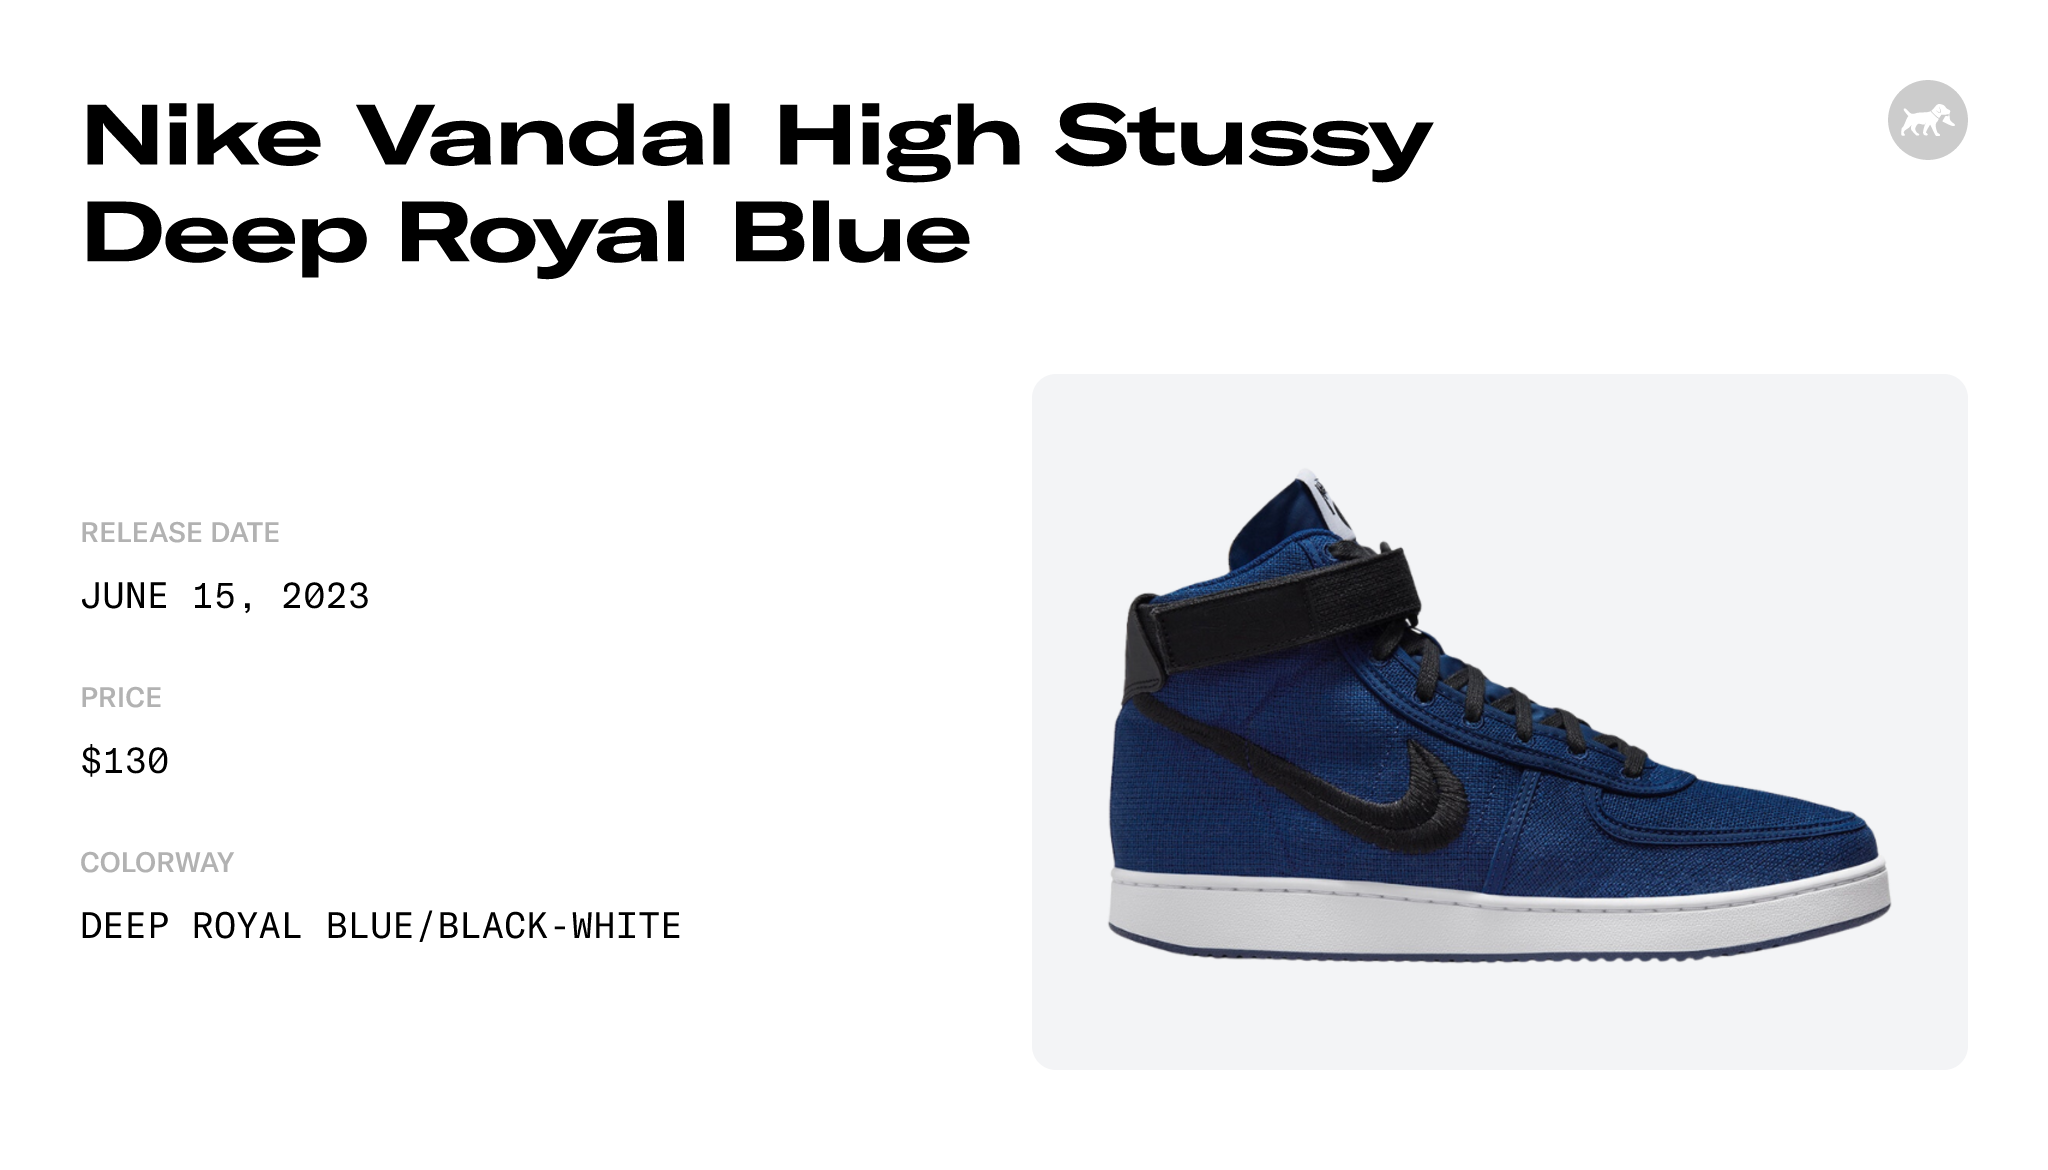 Stussy x Nike Vandal High SP Deep Royal Blue DX5425-400